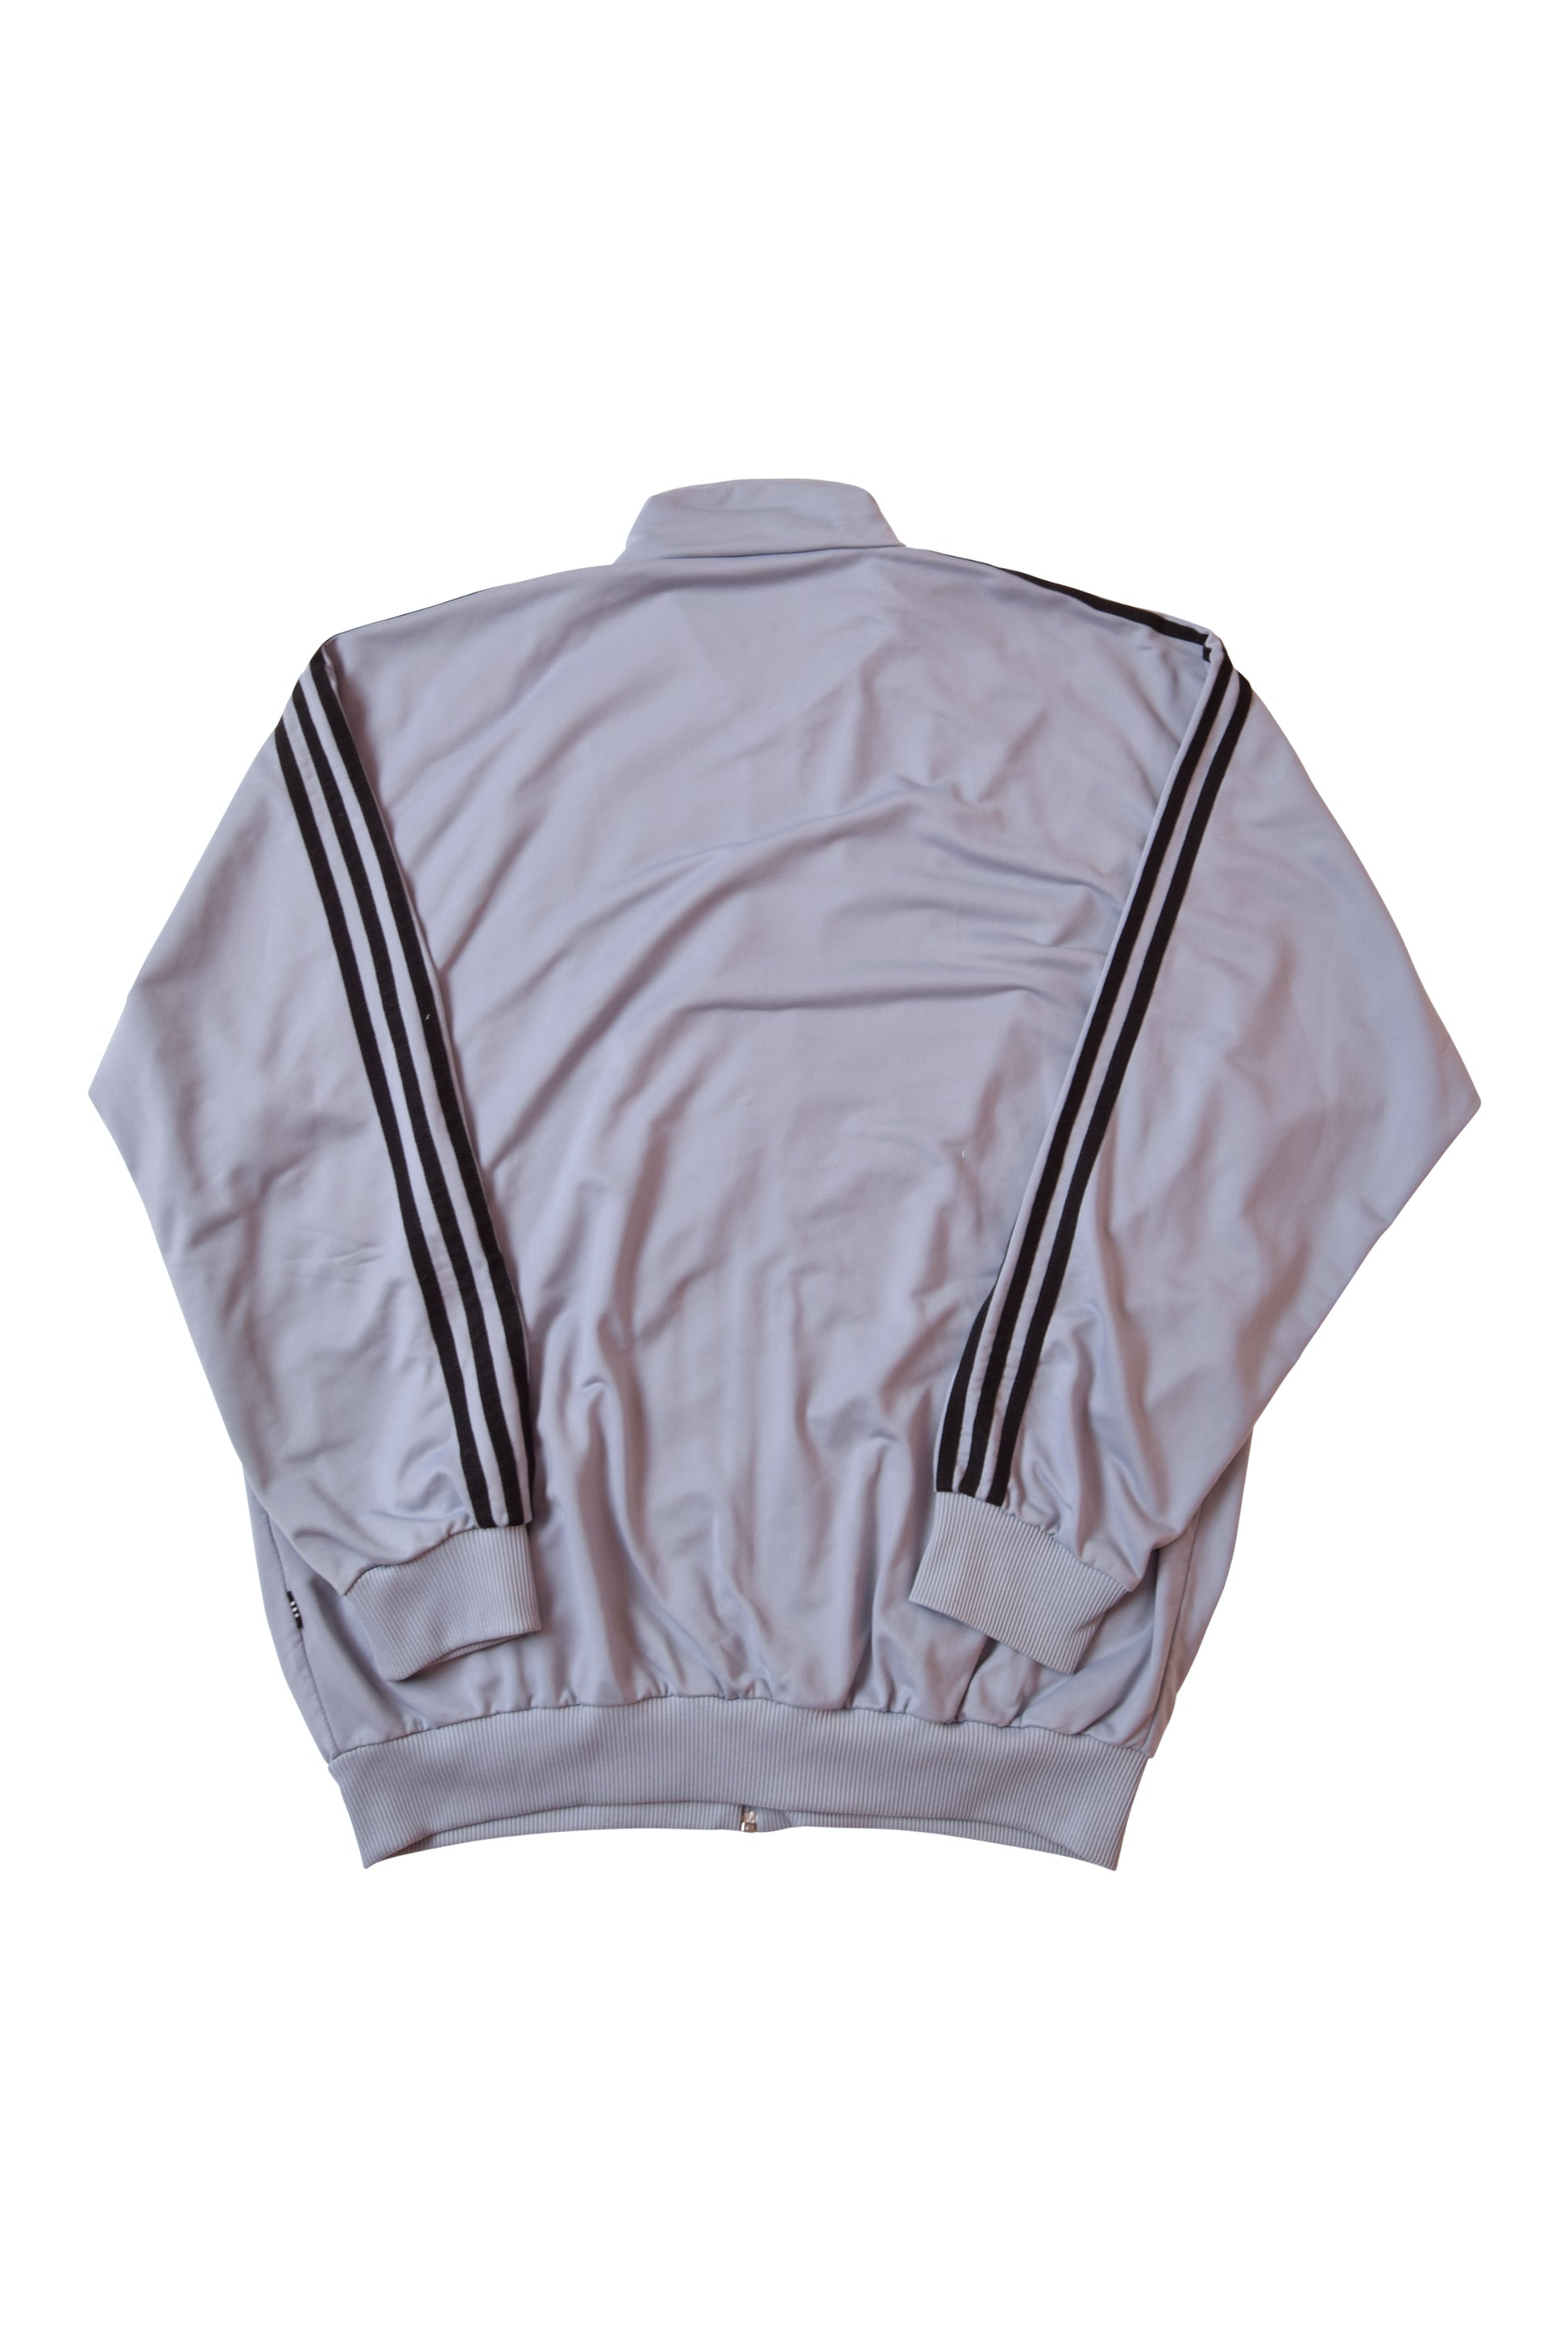 Vintage Adidas Jacket / Track Top 90's Size L-XL